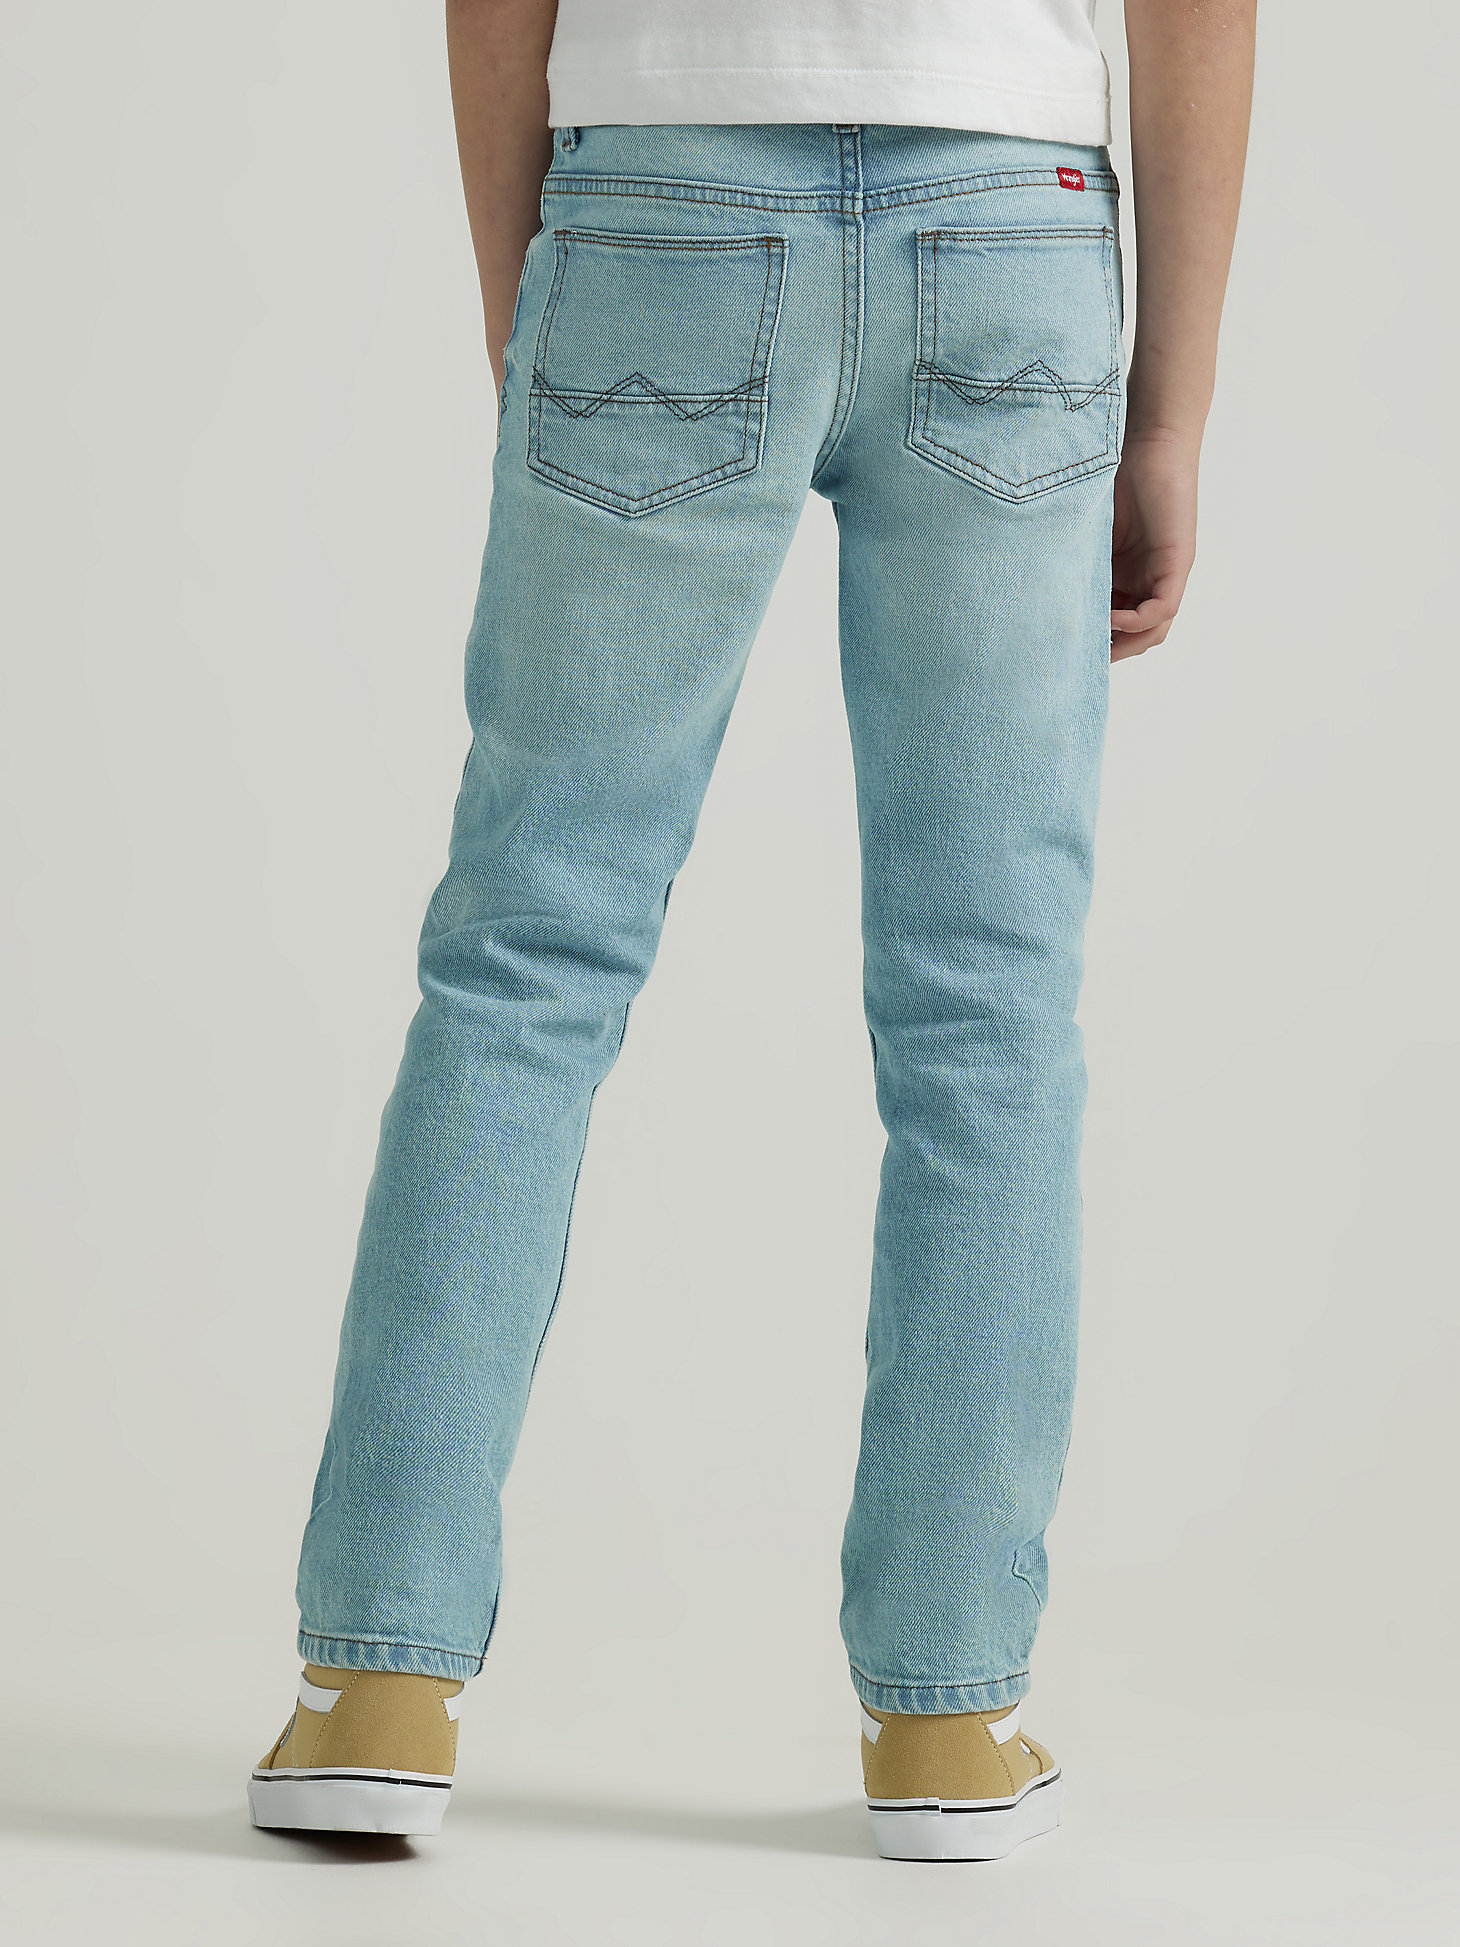 Boy's Indigood Slim Fit Jean (8-16) in Rustic Blue alternative view 1